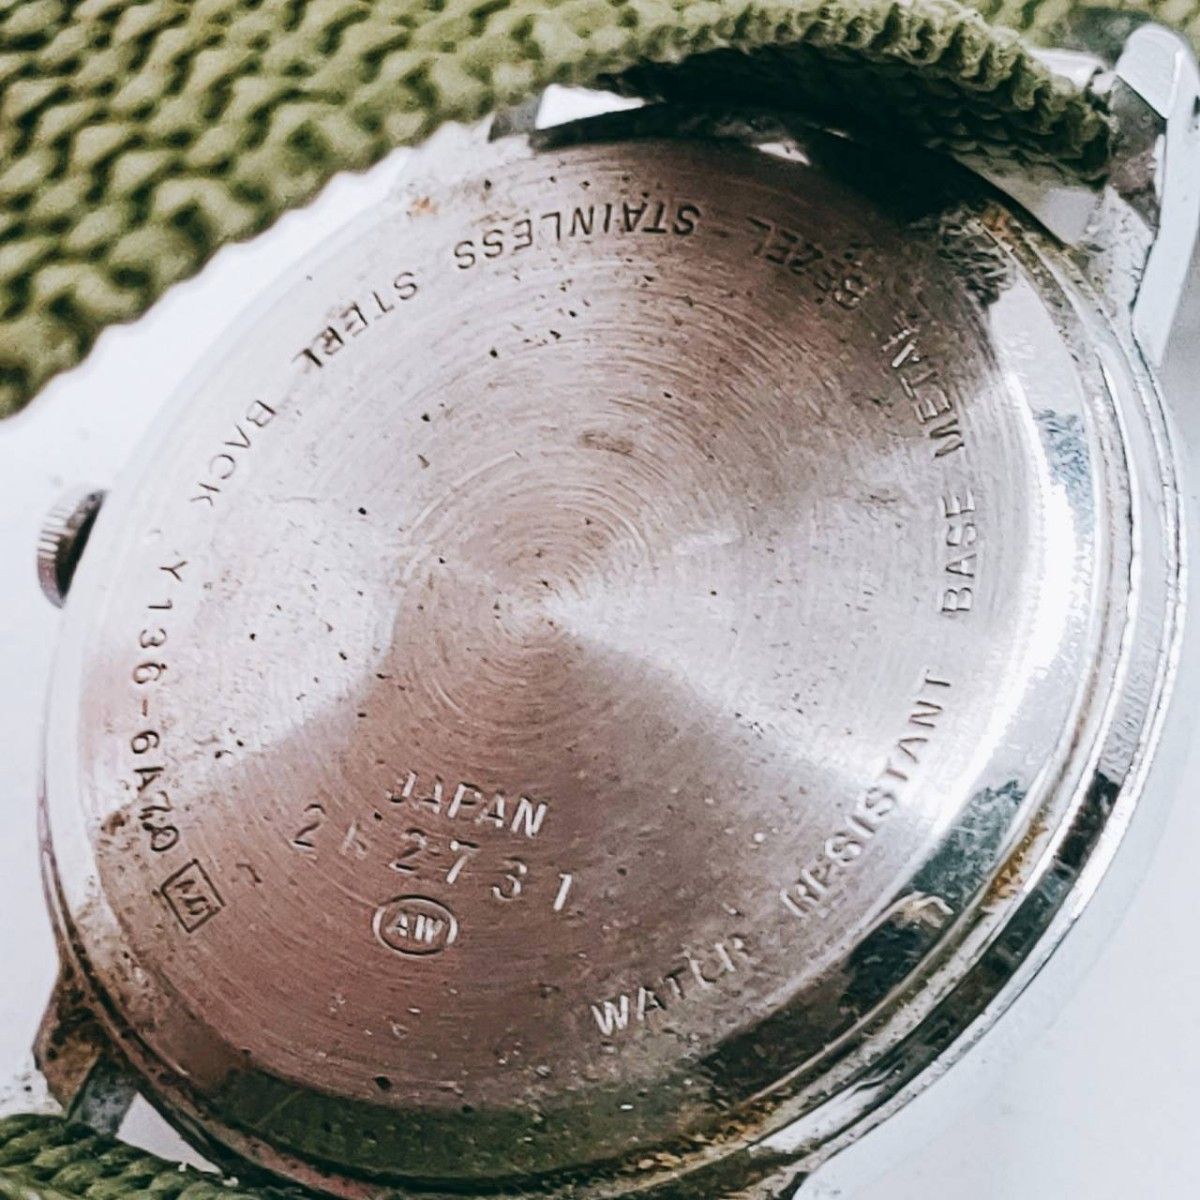 #102 SEIKO ALBA セイコー アルバ Y136-6A70 腕時計 アナログ 3針 白文字盤 シルバー基調 メンズ 時計